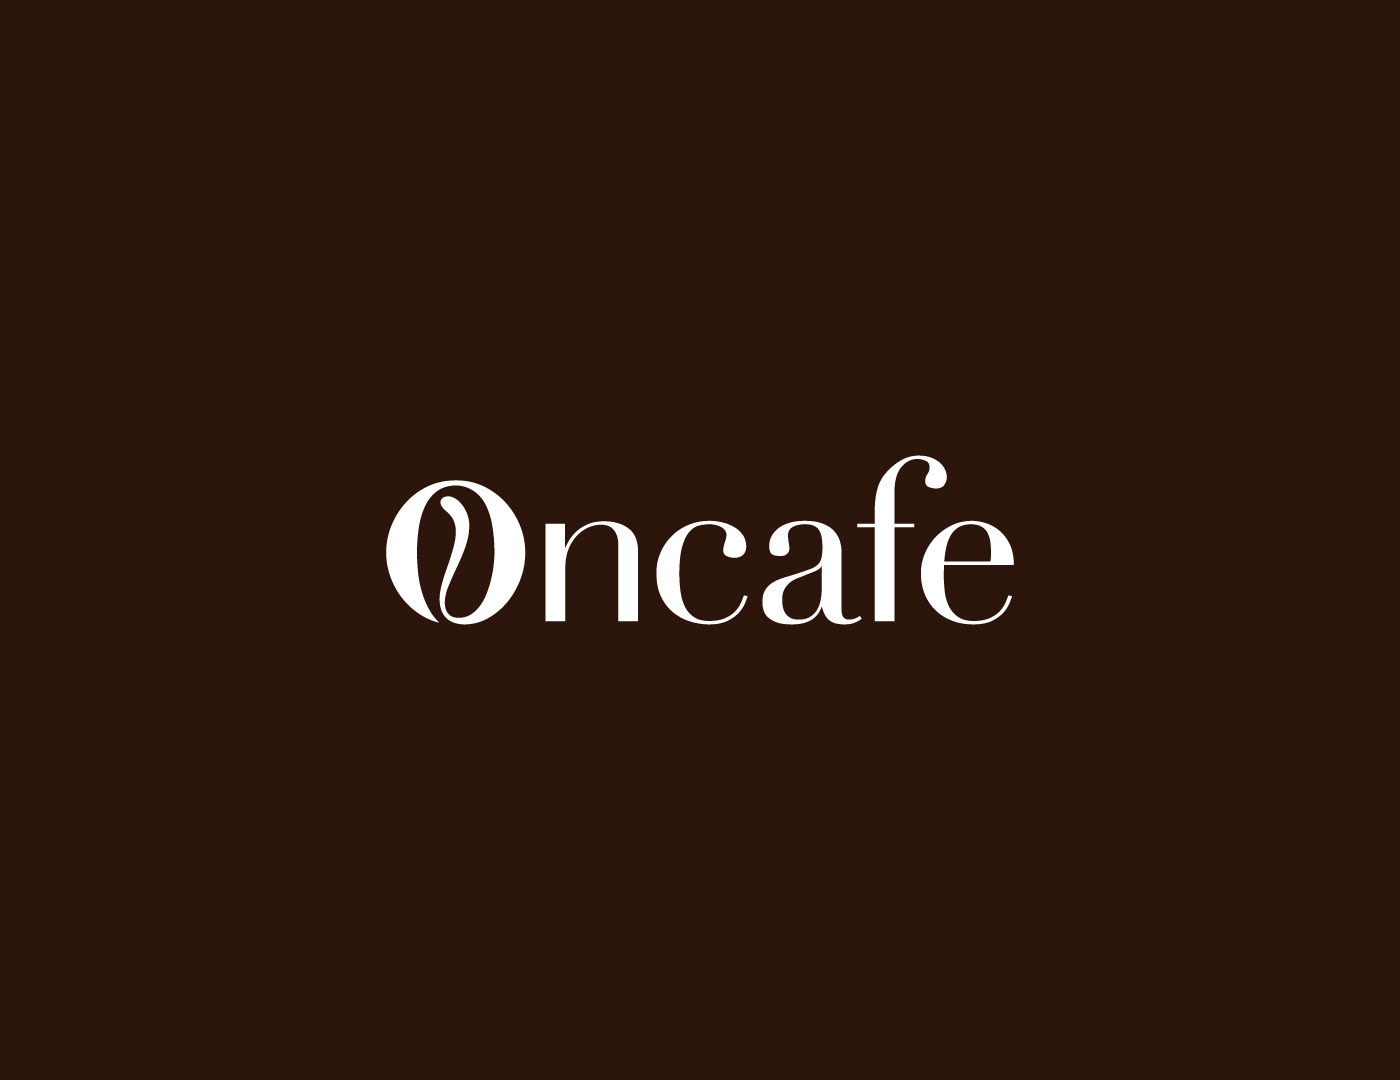 Coffee Shop logo, logo design, modern logos, creative logo, brand identity and company branding.